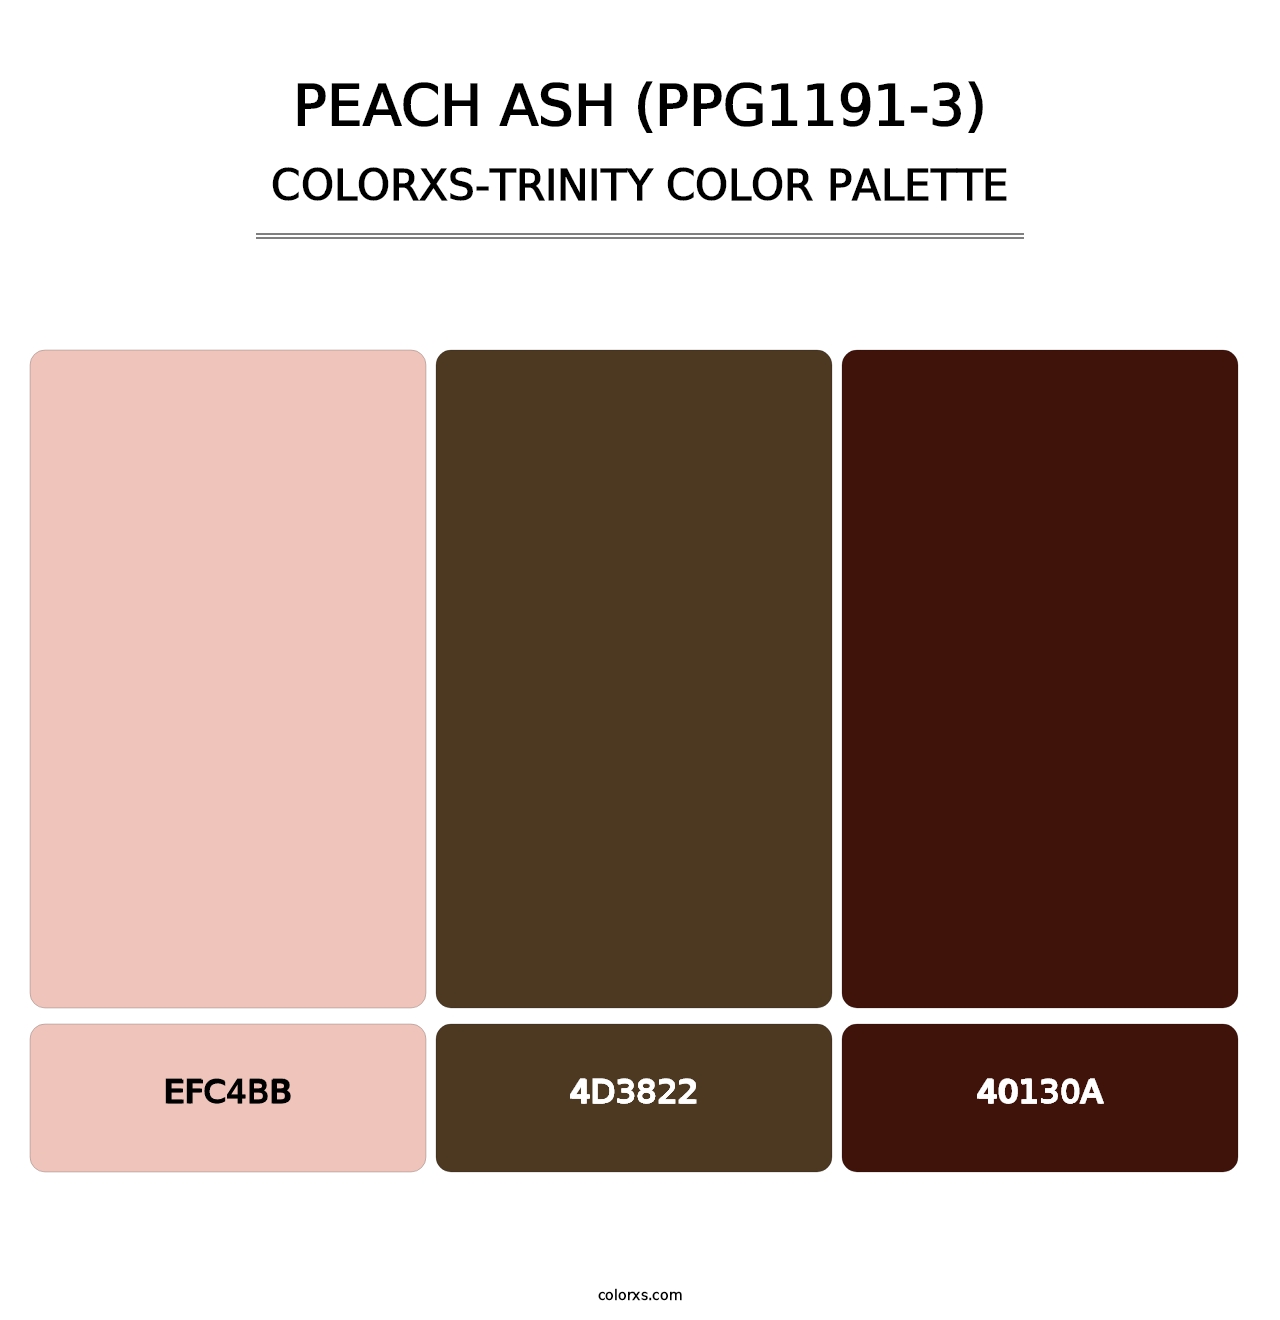 Peach Ash (PPG1191-3) - Colorxs Trinity Palette